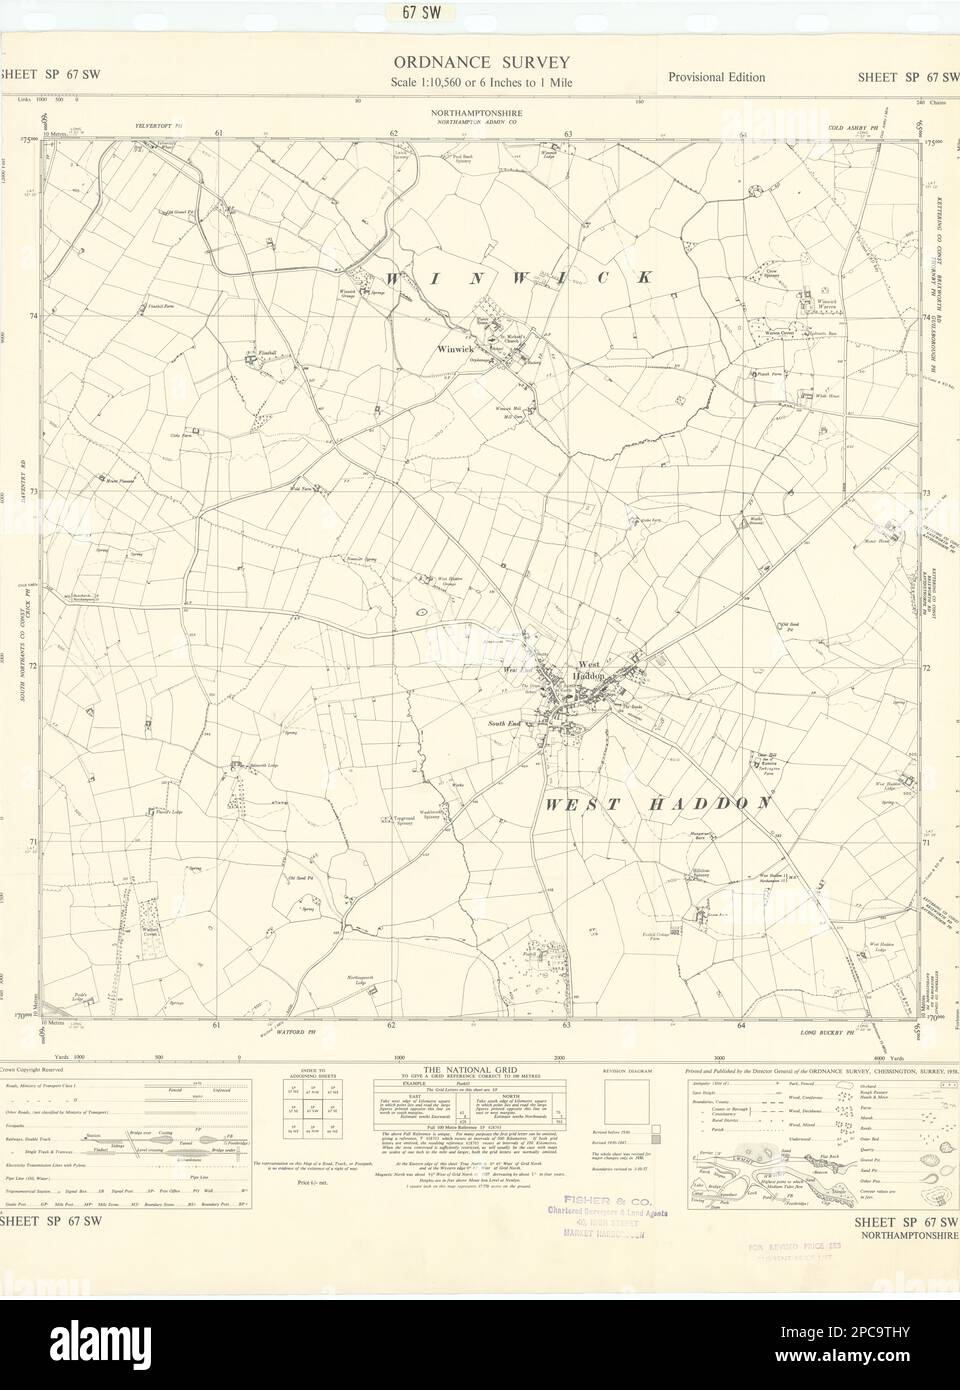 Ordnance Survey Sheet SP67SW Northamptonshire West Haddon Winwick 1958 mapa antiguo Foto de stock